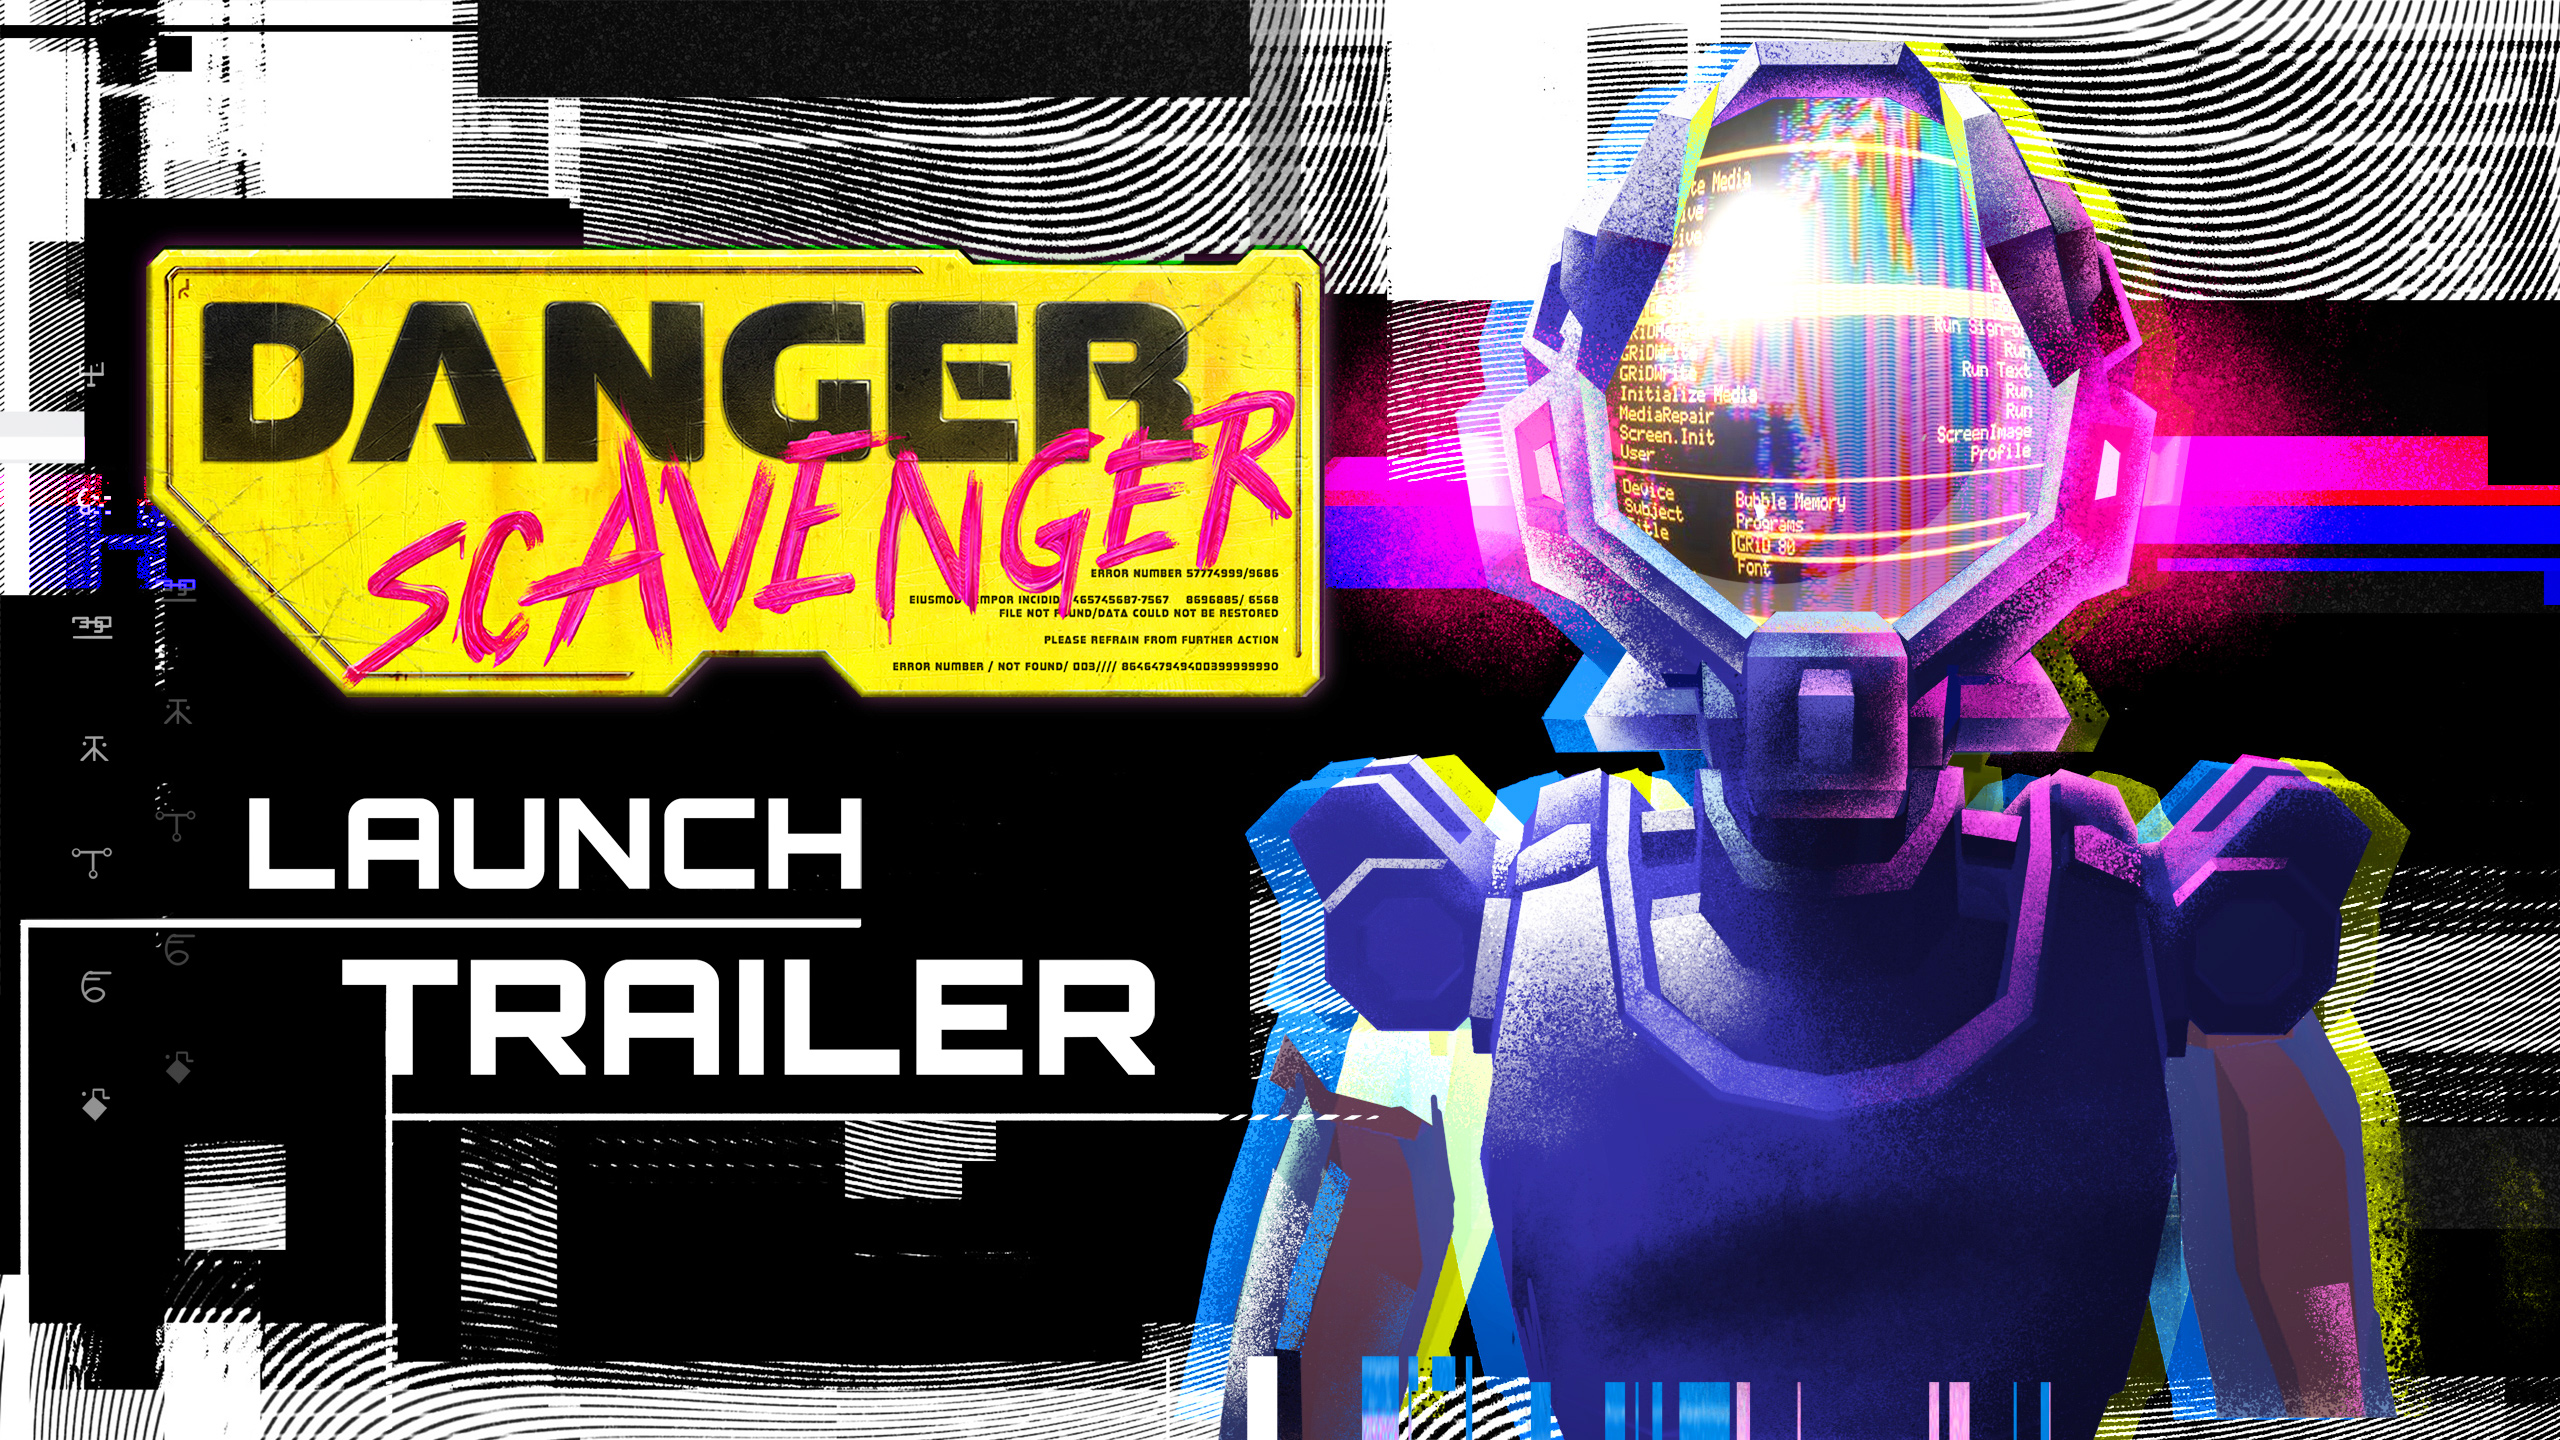 Danger Scavenger free downloads